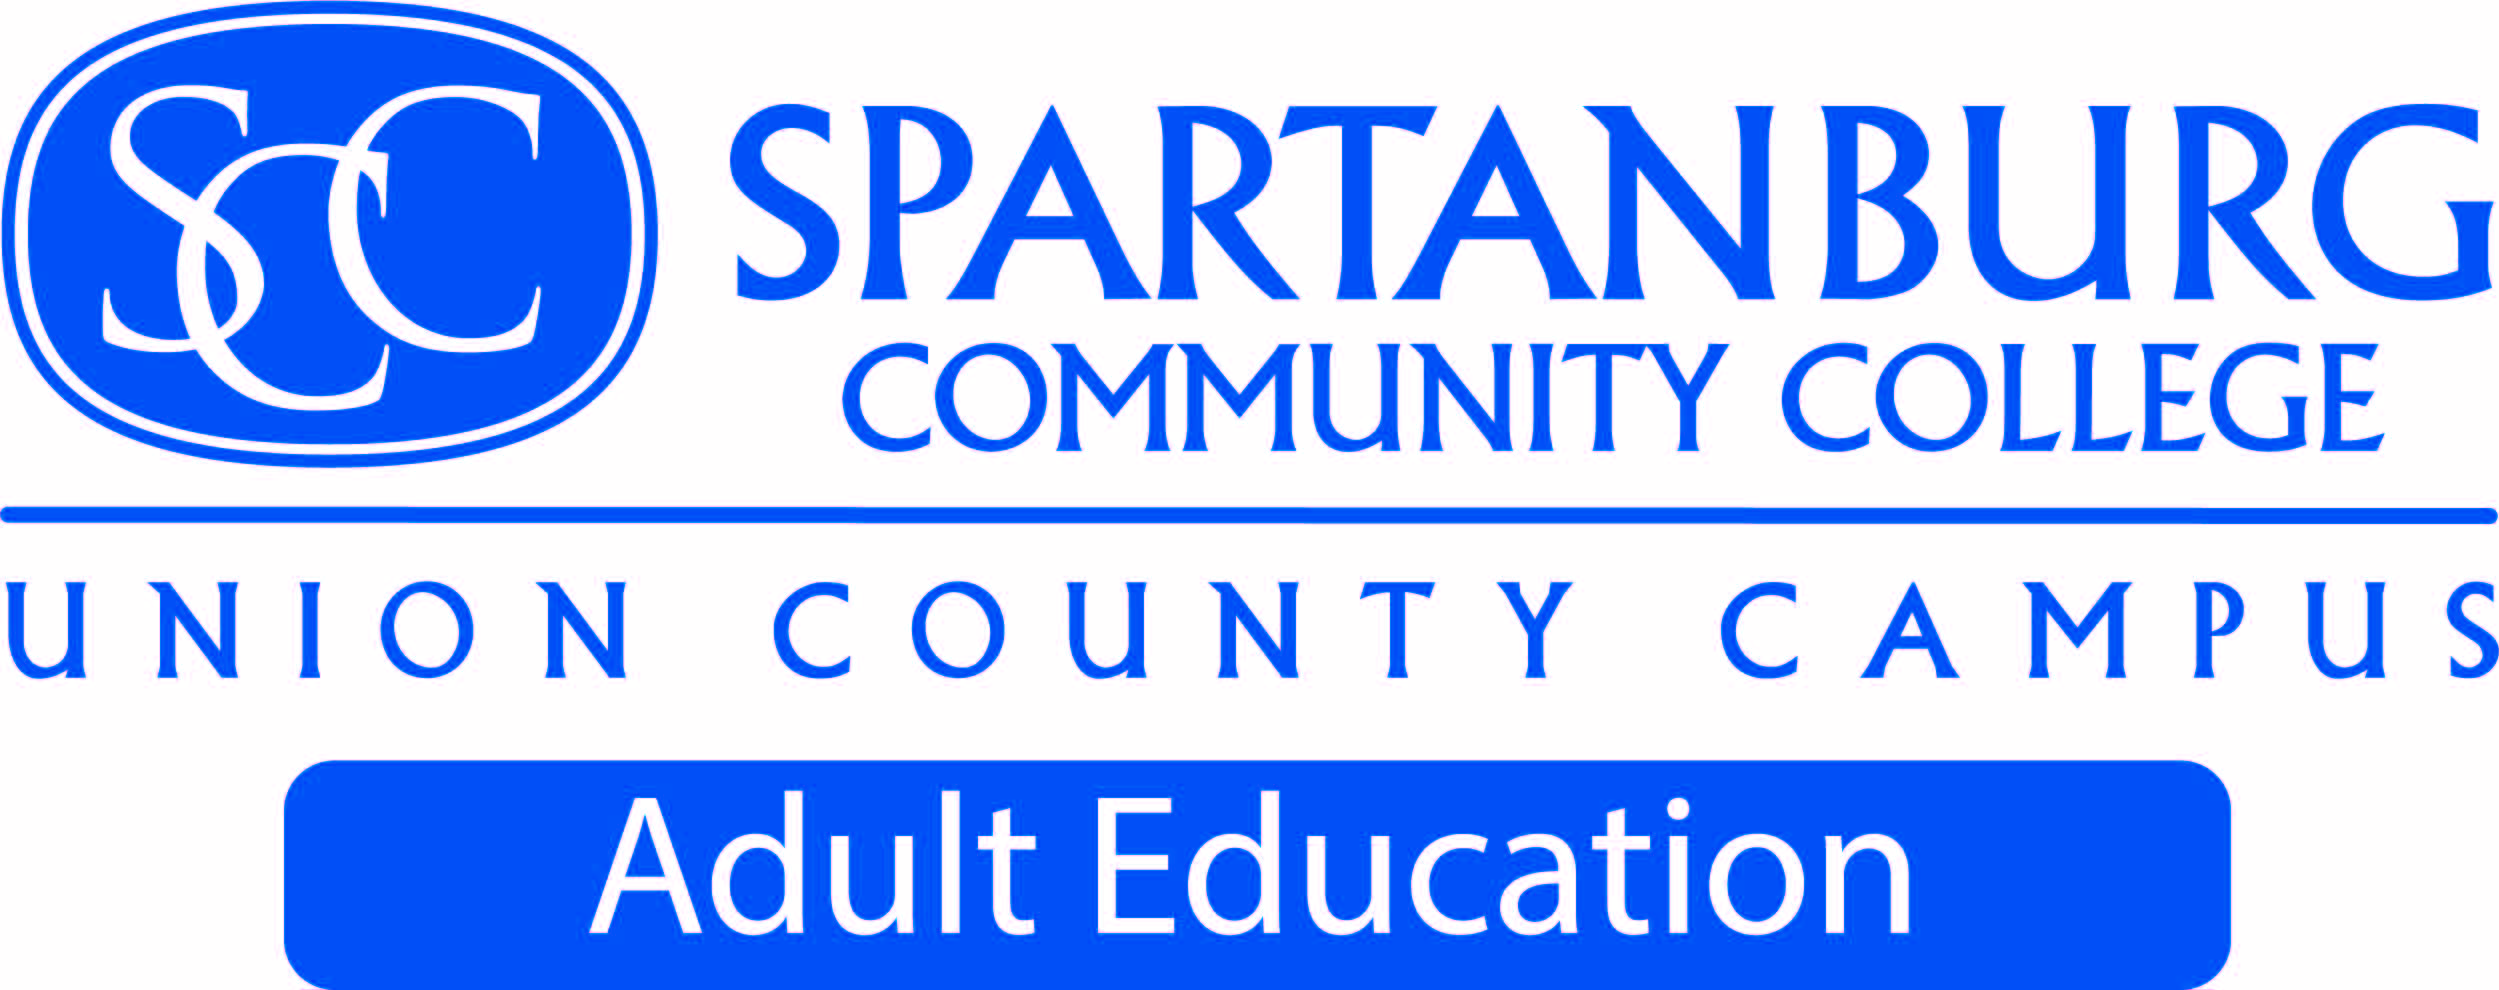 Spartanburg Community College Union County Adult Education logo